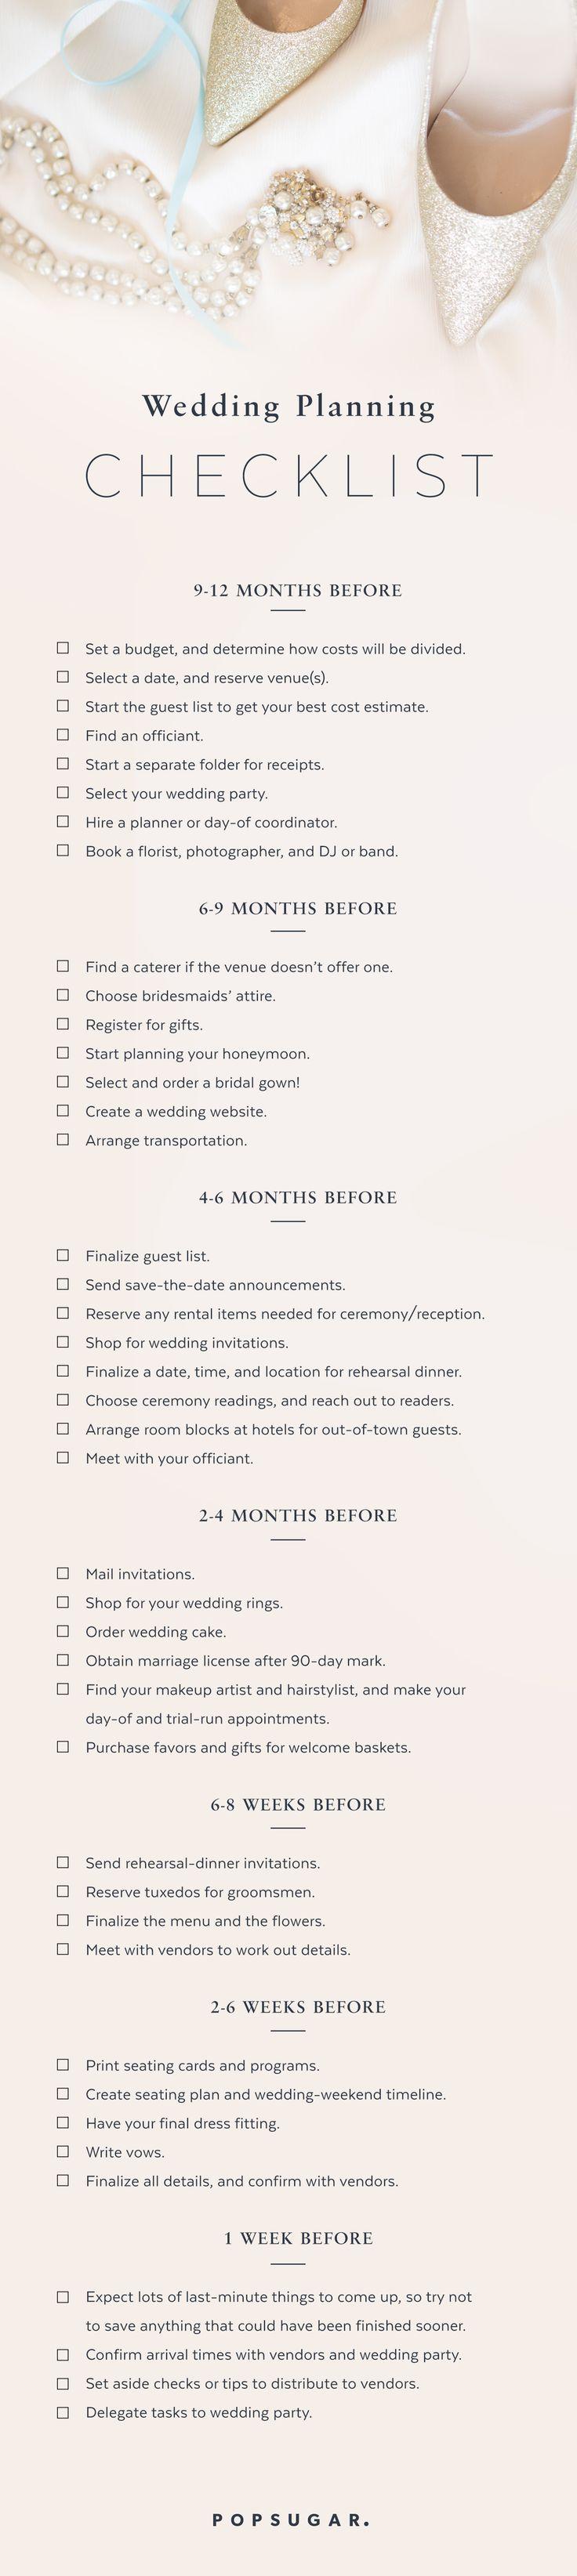 Wedding - Download The Ultimate Wedding Planning Checklist!